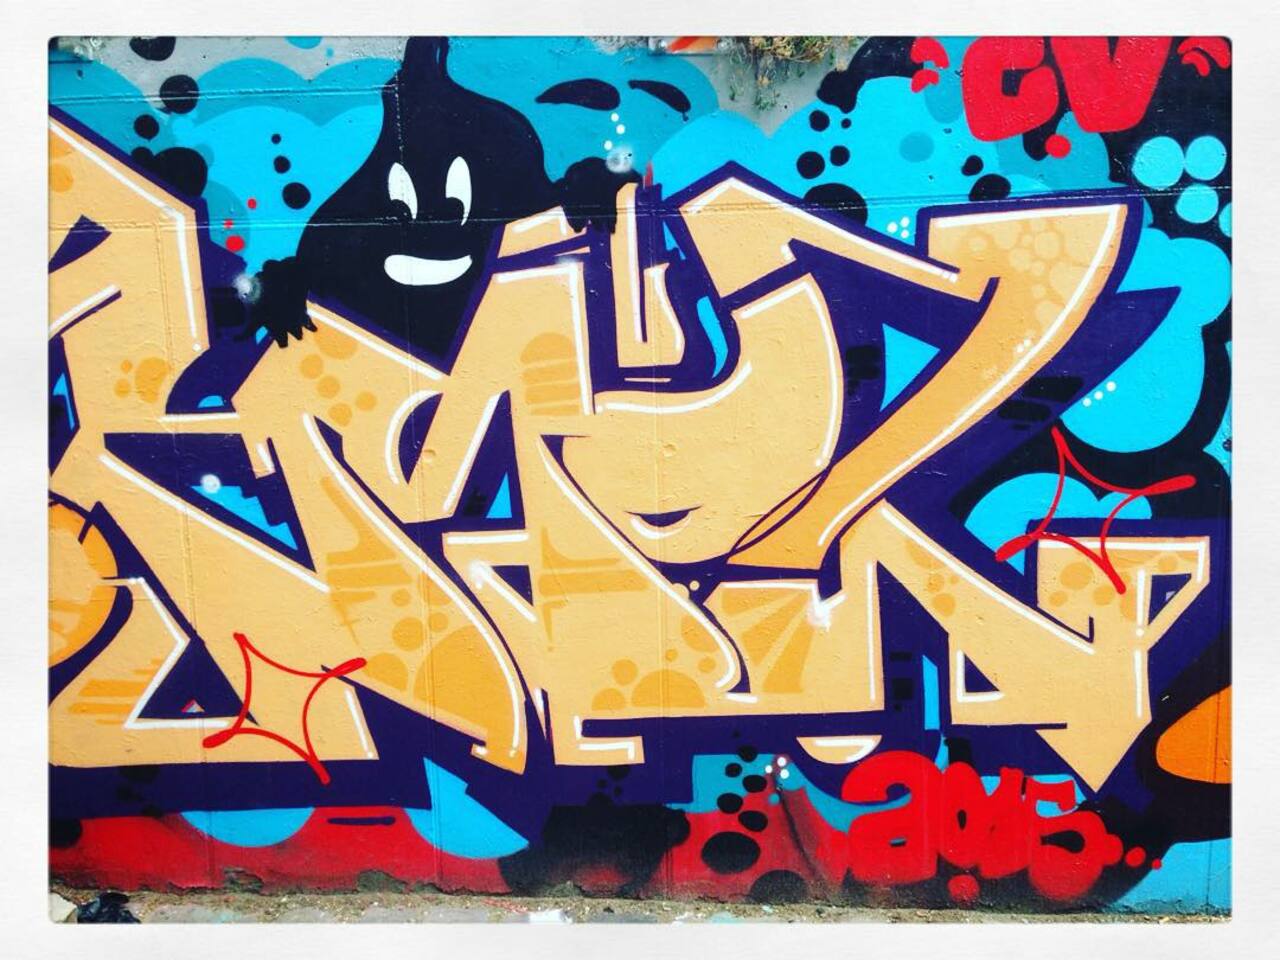 #Paris #graffiti photo by @cibti4987 http://ift.tt/1iCbozs #StreetArt http://t.co/B5gRG5AGhM